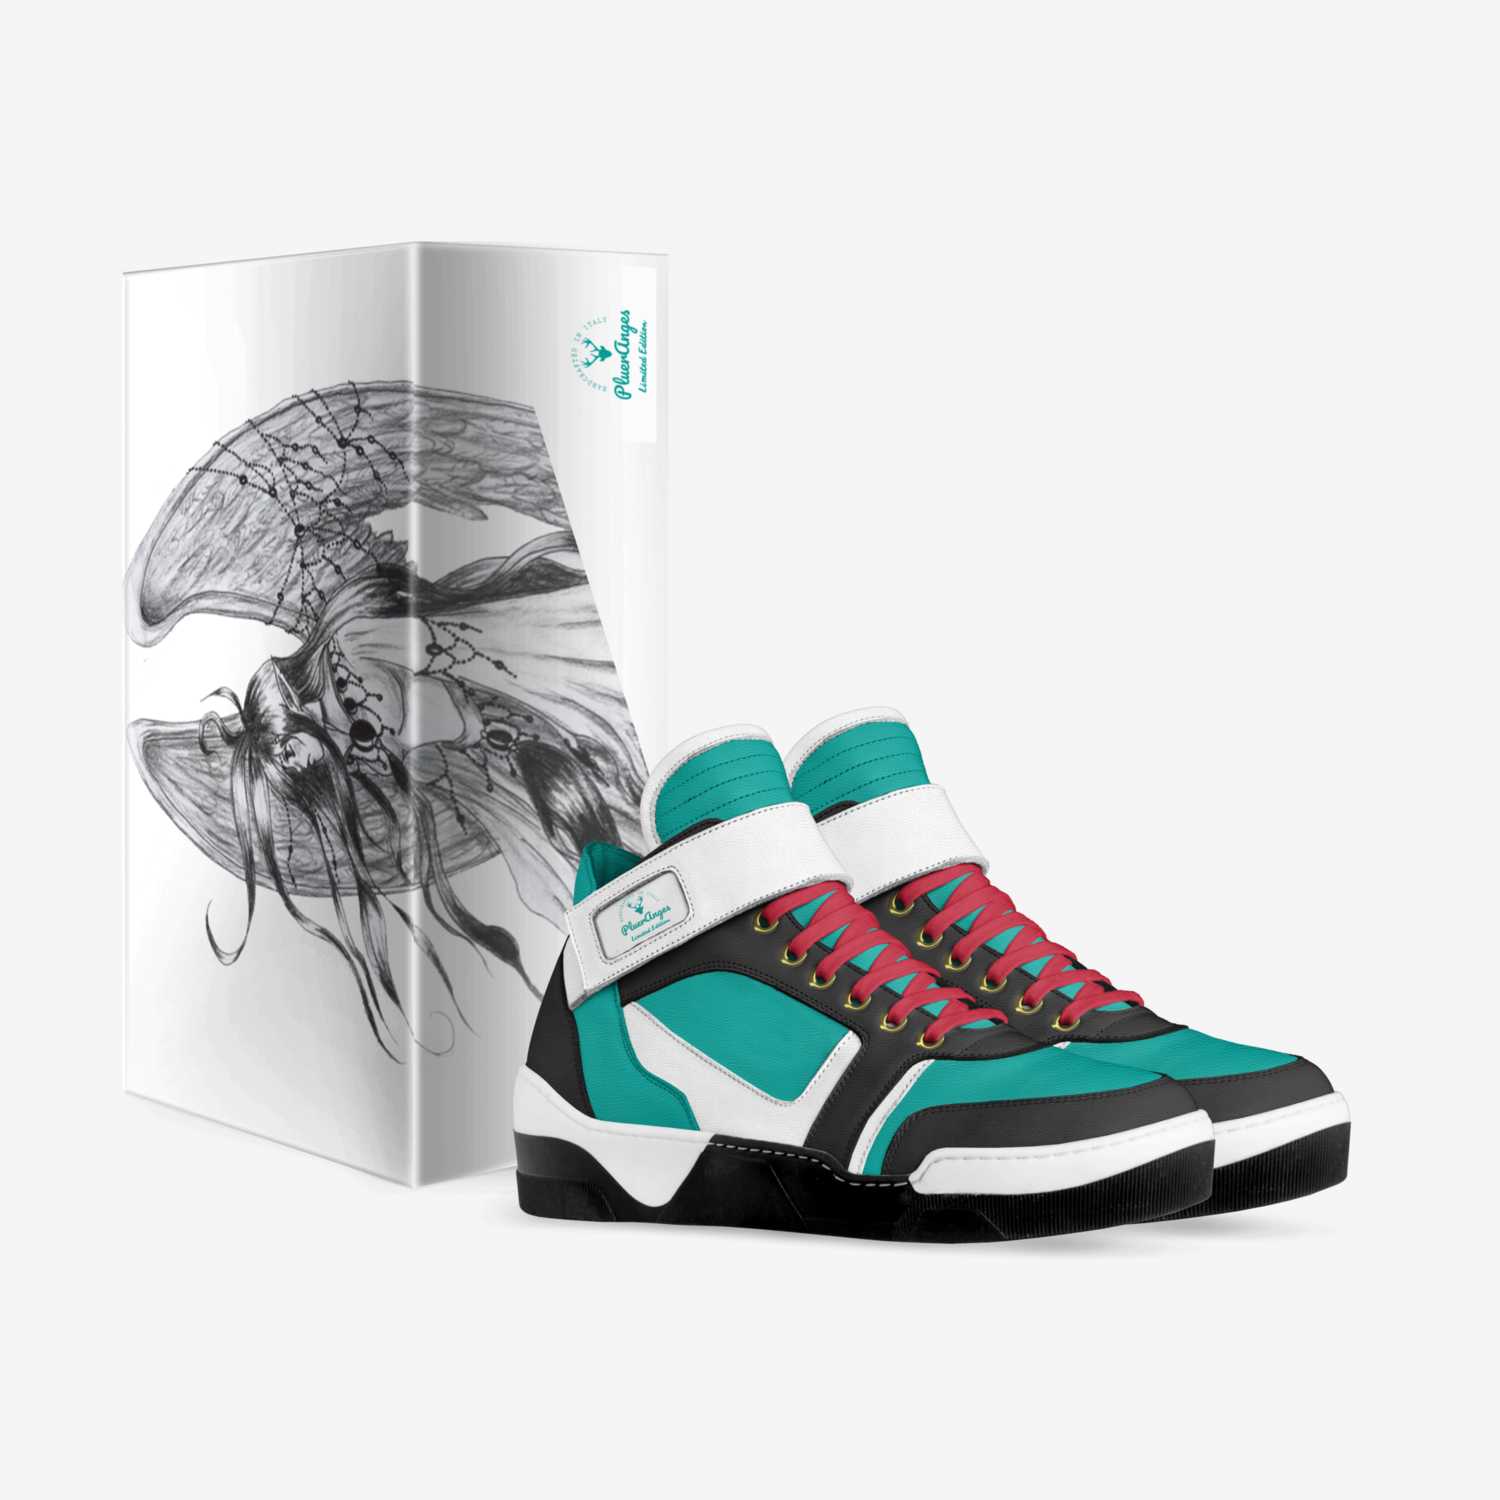 Pleur Ange custom made in Italy shoes by Rodrigo Zapata | Box view